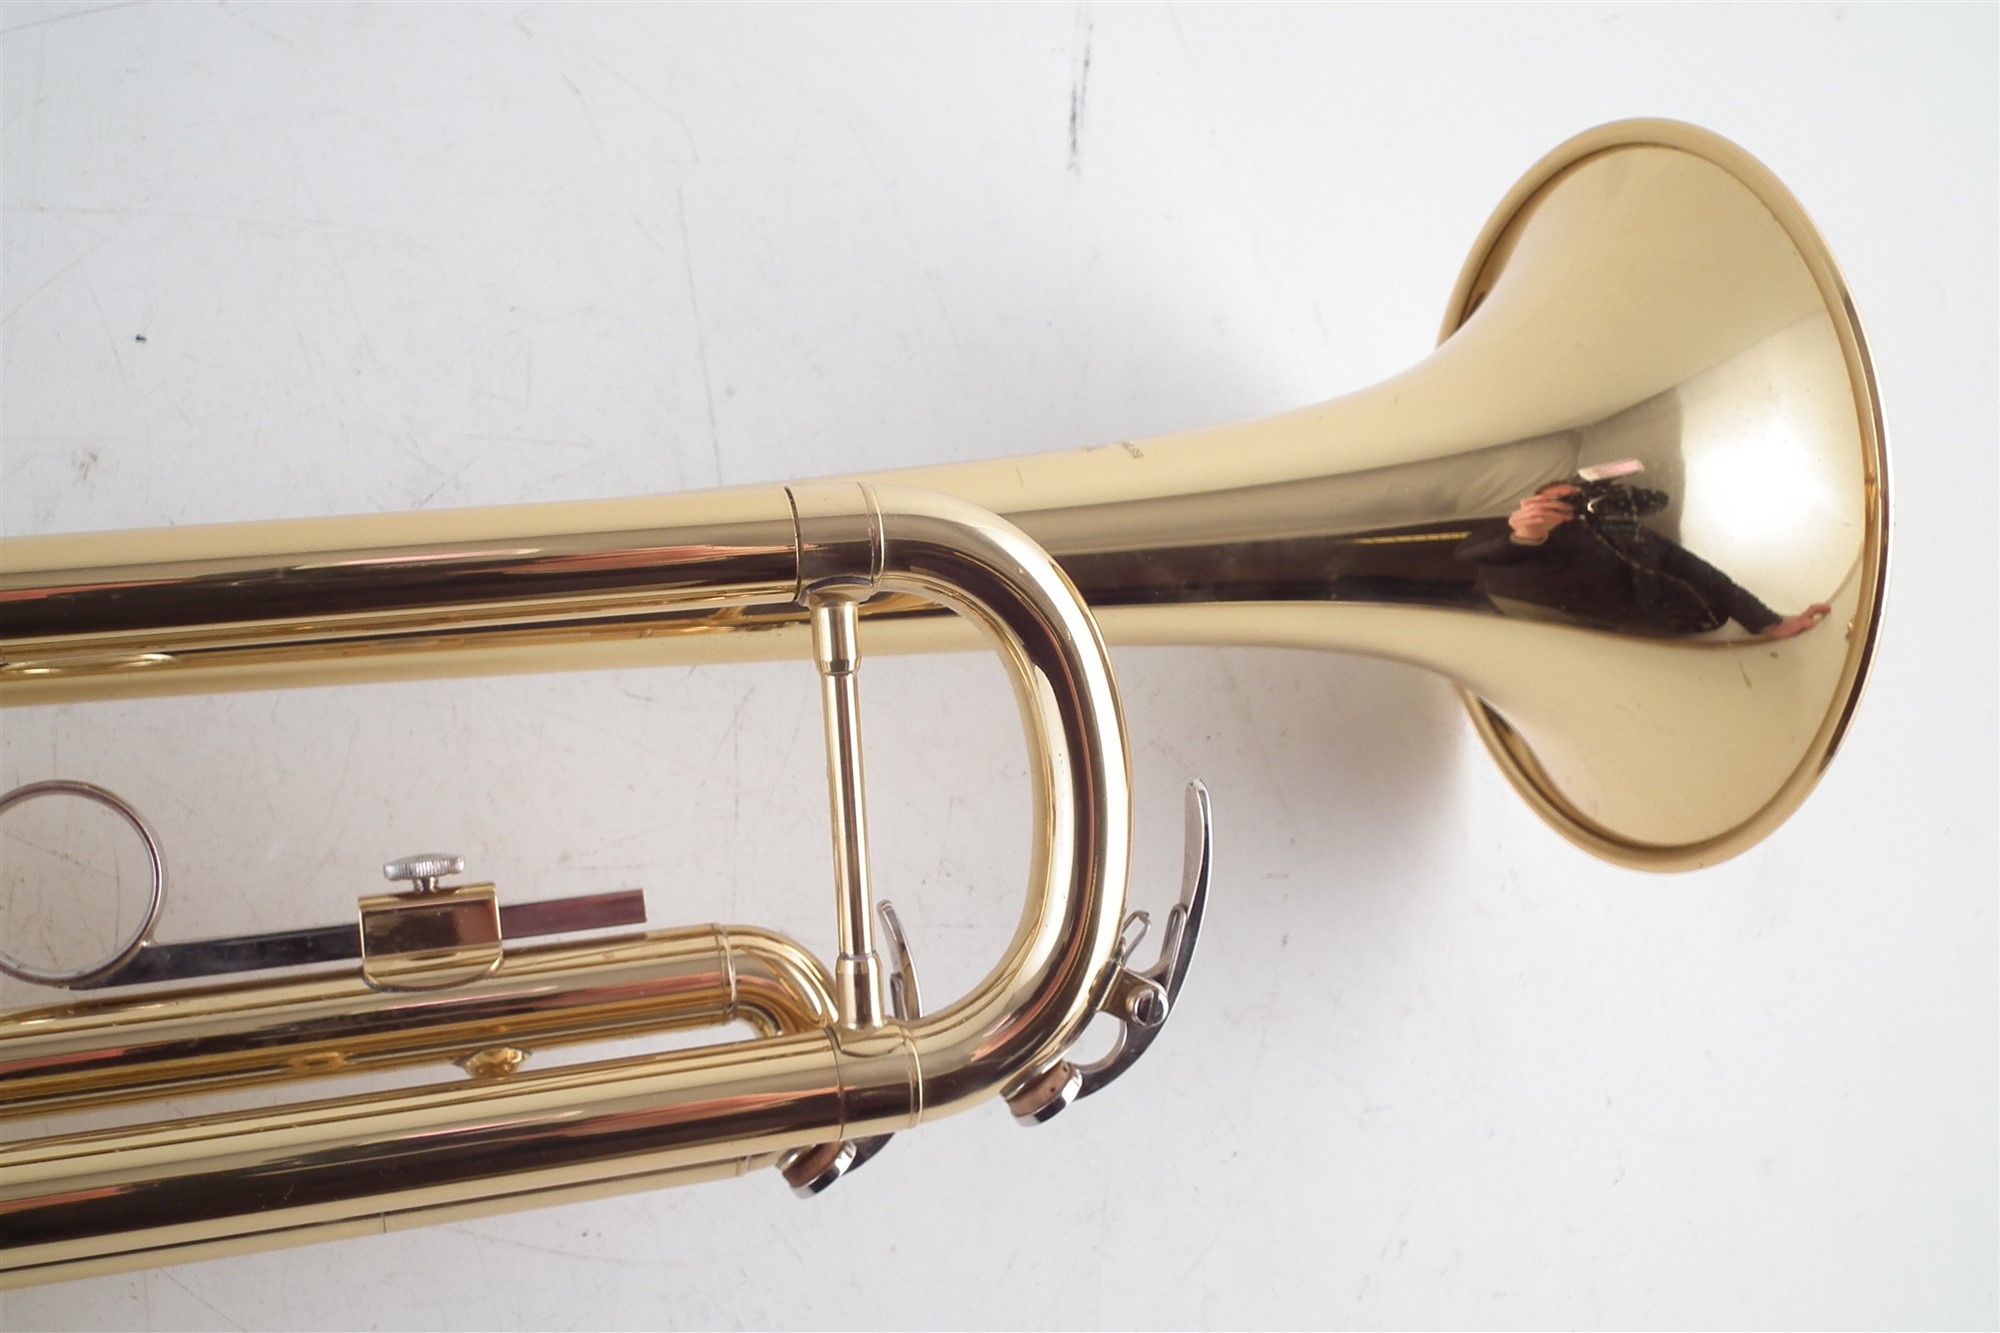 yamaha trumpet serial number lookup